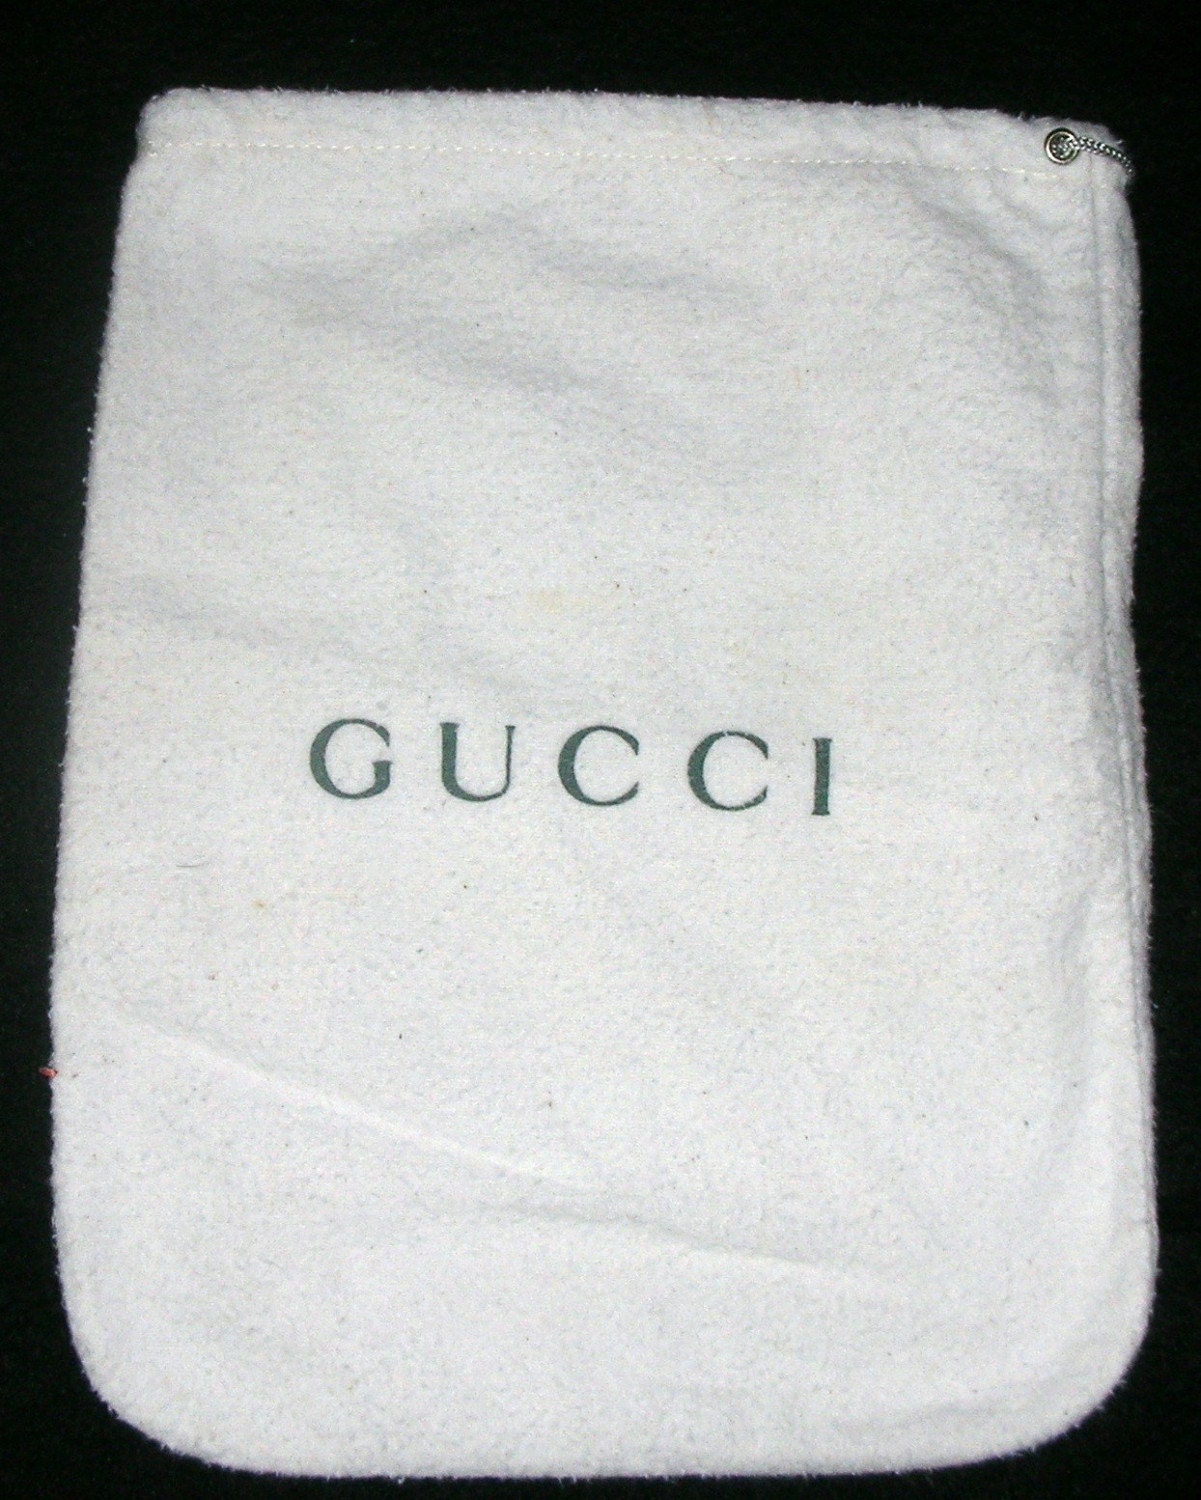 Gucci Shoe Bag Christmas Stocking Stuffer Storage by seattlebrat